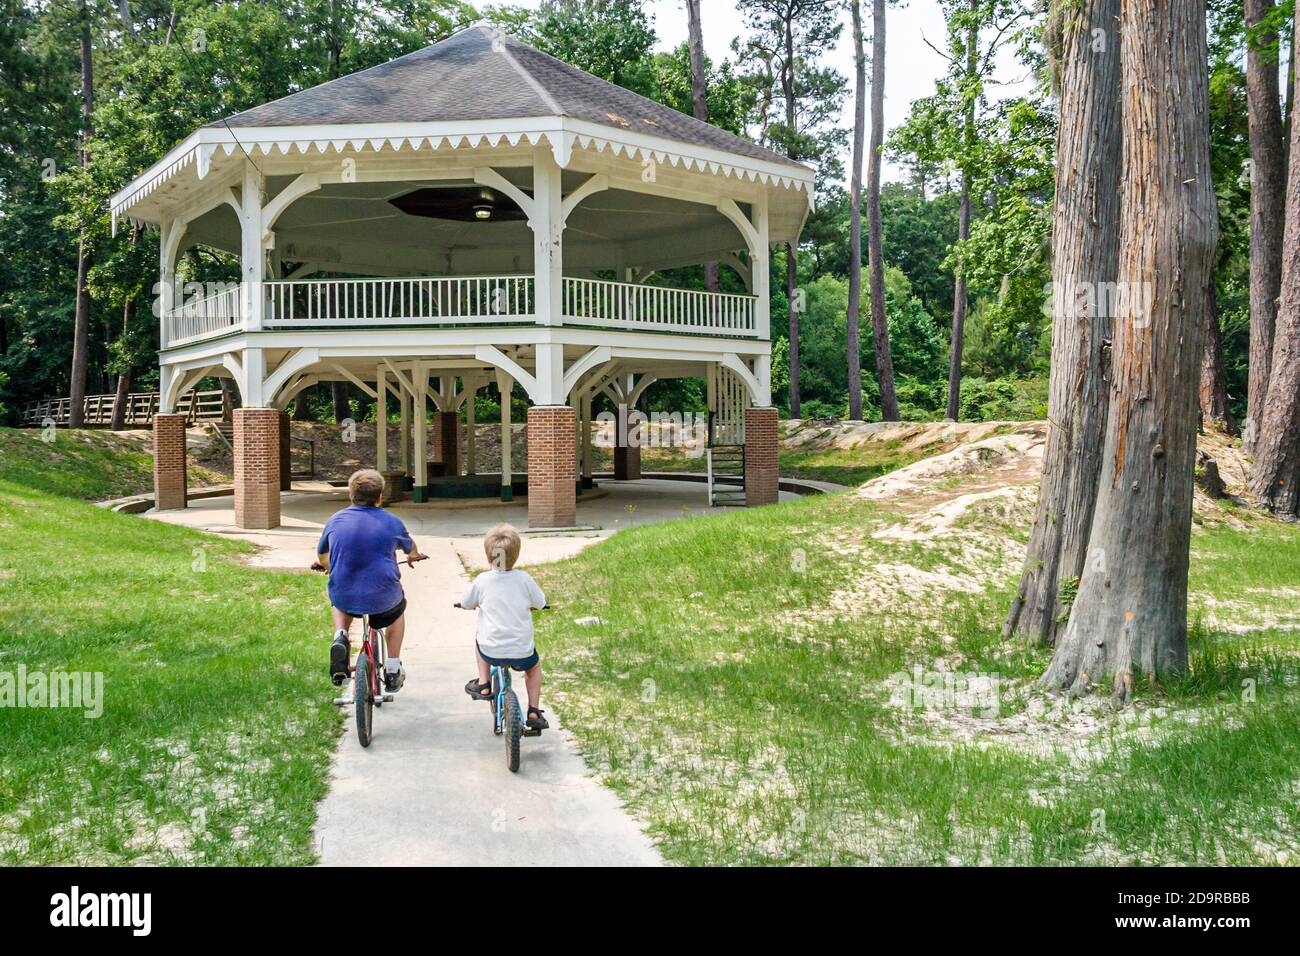 Louisiana Northshore,Abita Springs,Tourist Park pavilion community center centre,boys riding bicycles bikes, Stock Photo